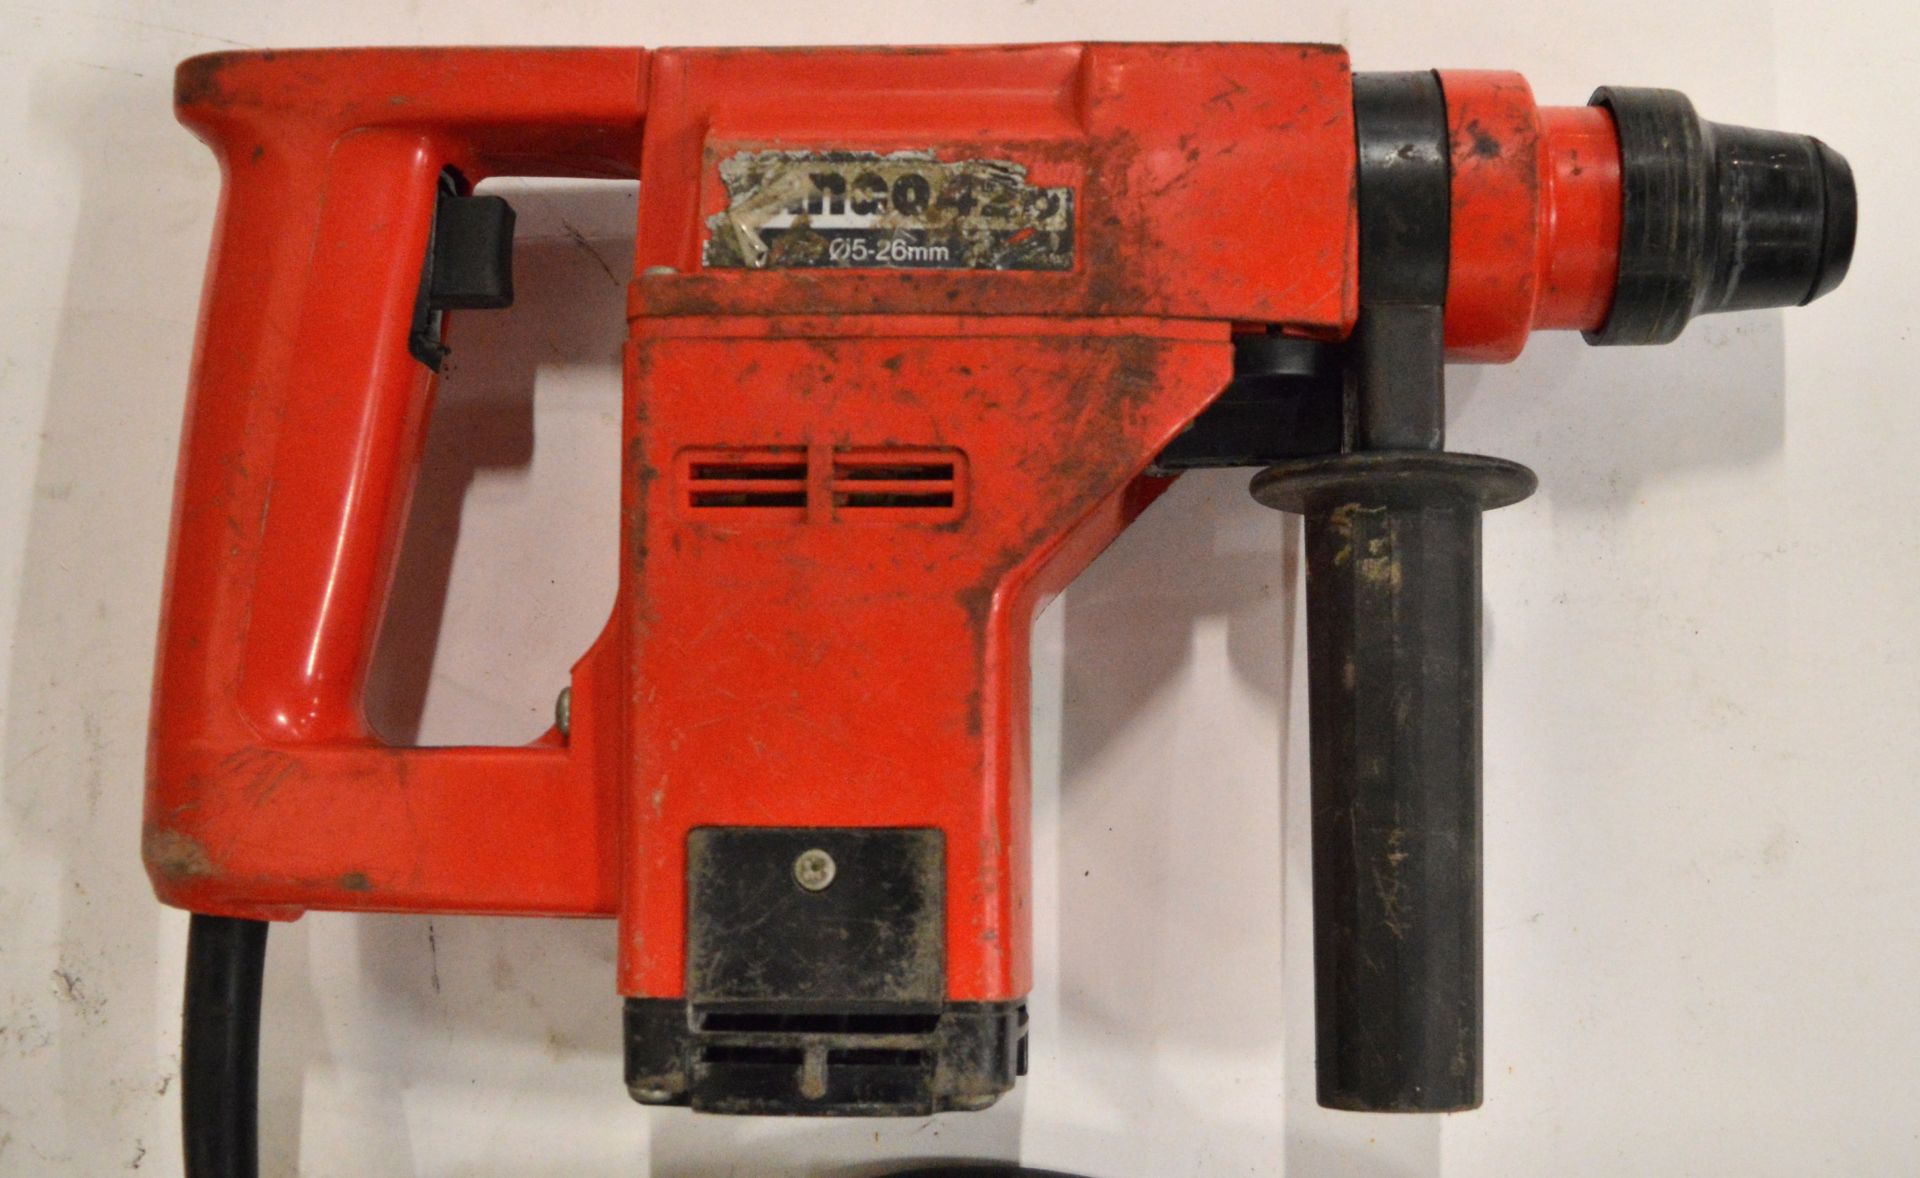 Kango 426 Hammer Drill - 110V. - Image 3 of 4